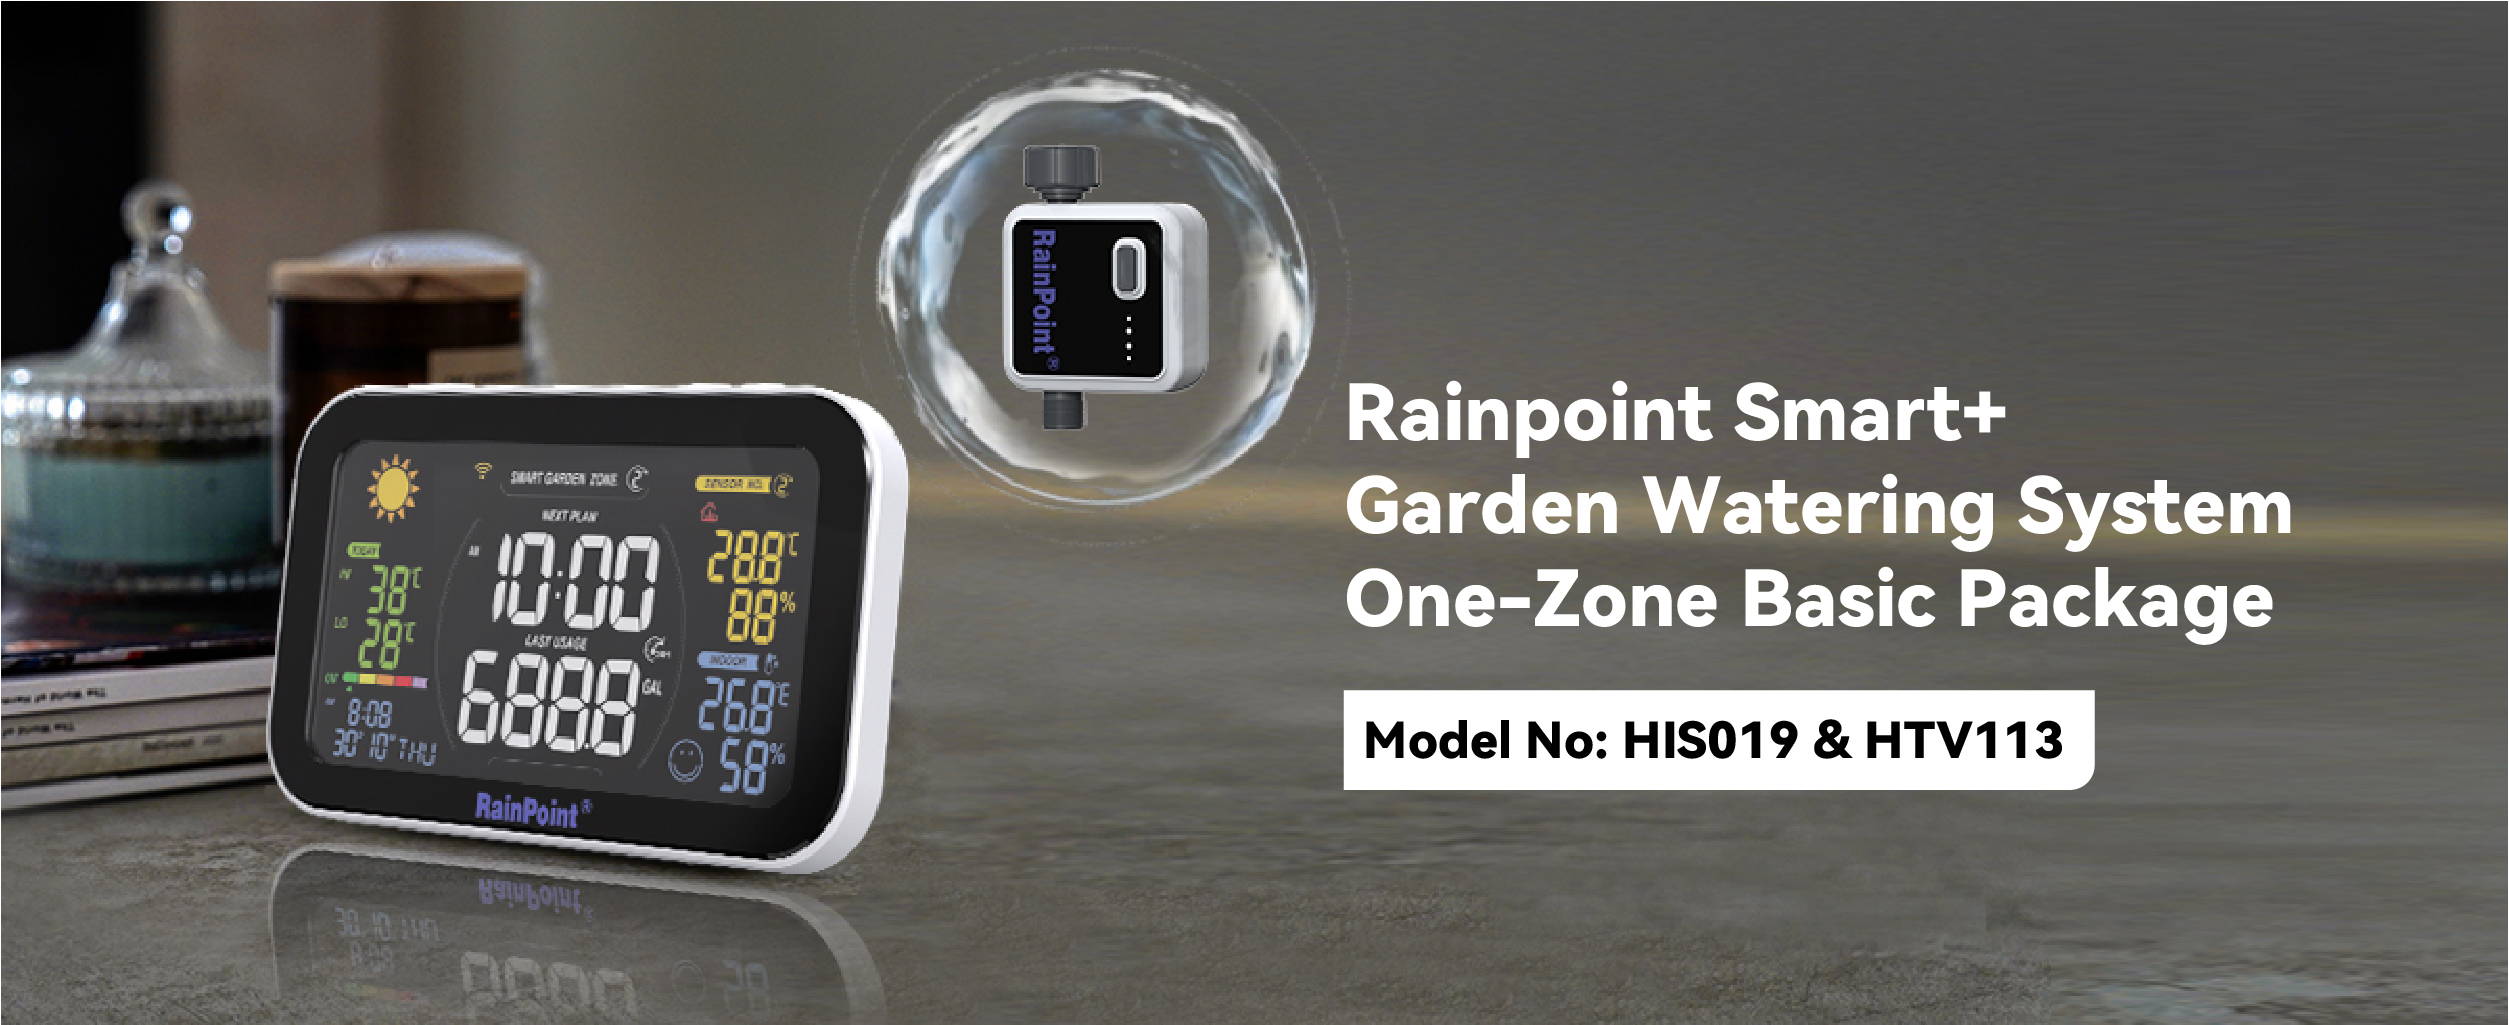 Rainpoint Smart+Garden Watering SystemOne-Zone Basic Package